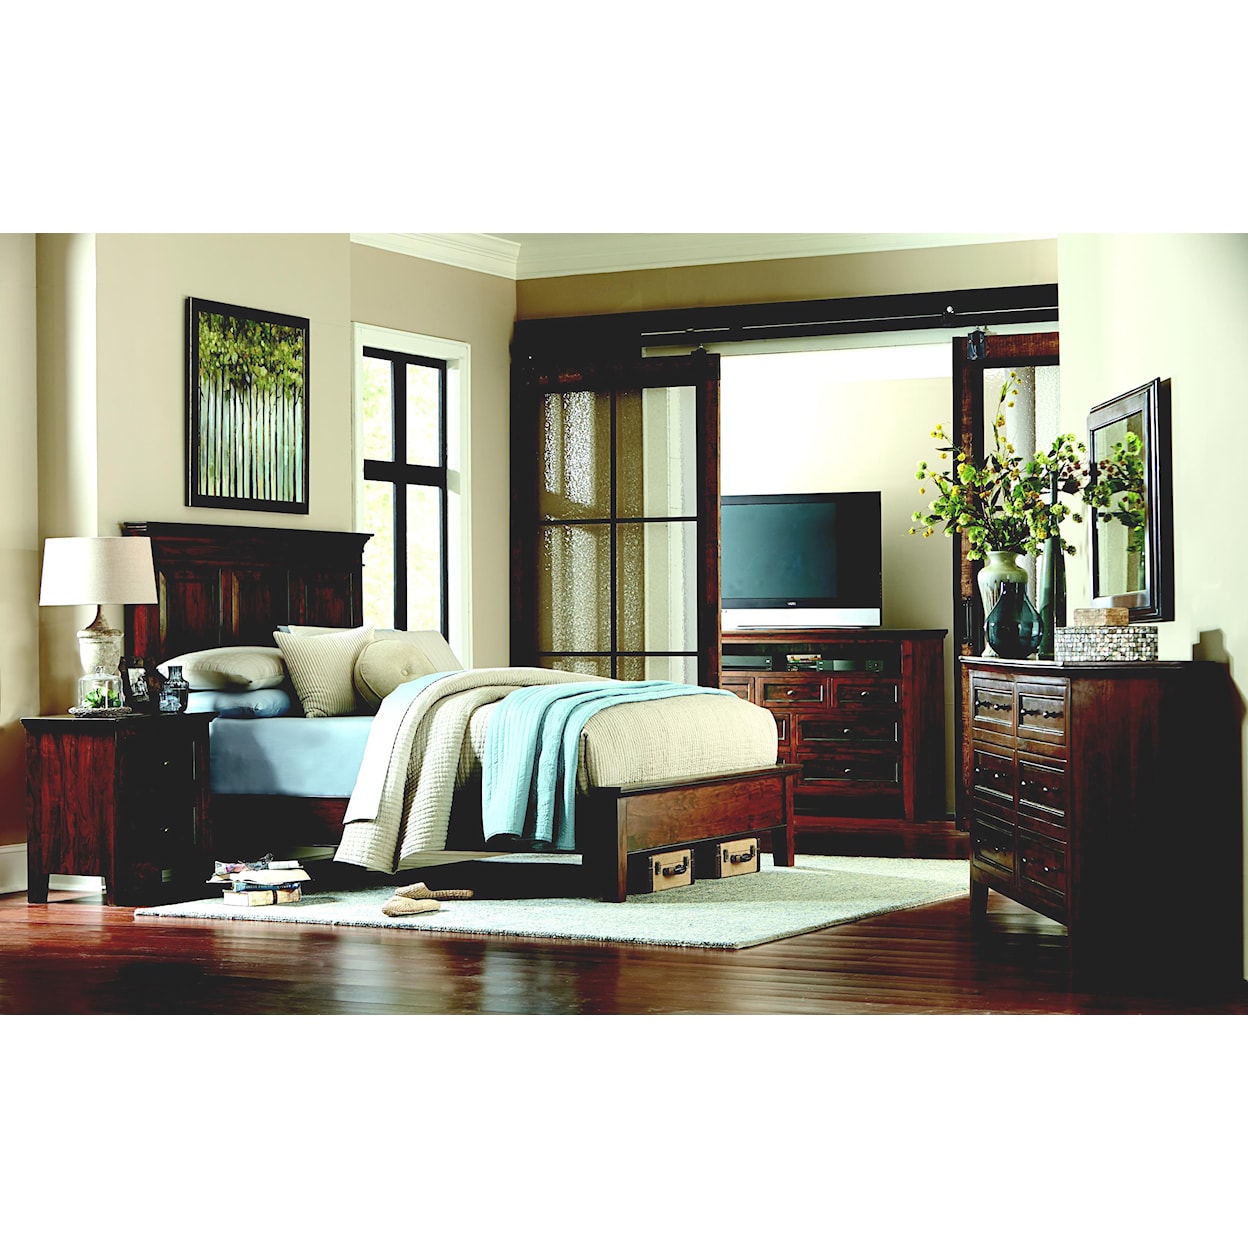 Home Trends & Design FTU King Panel Bed